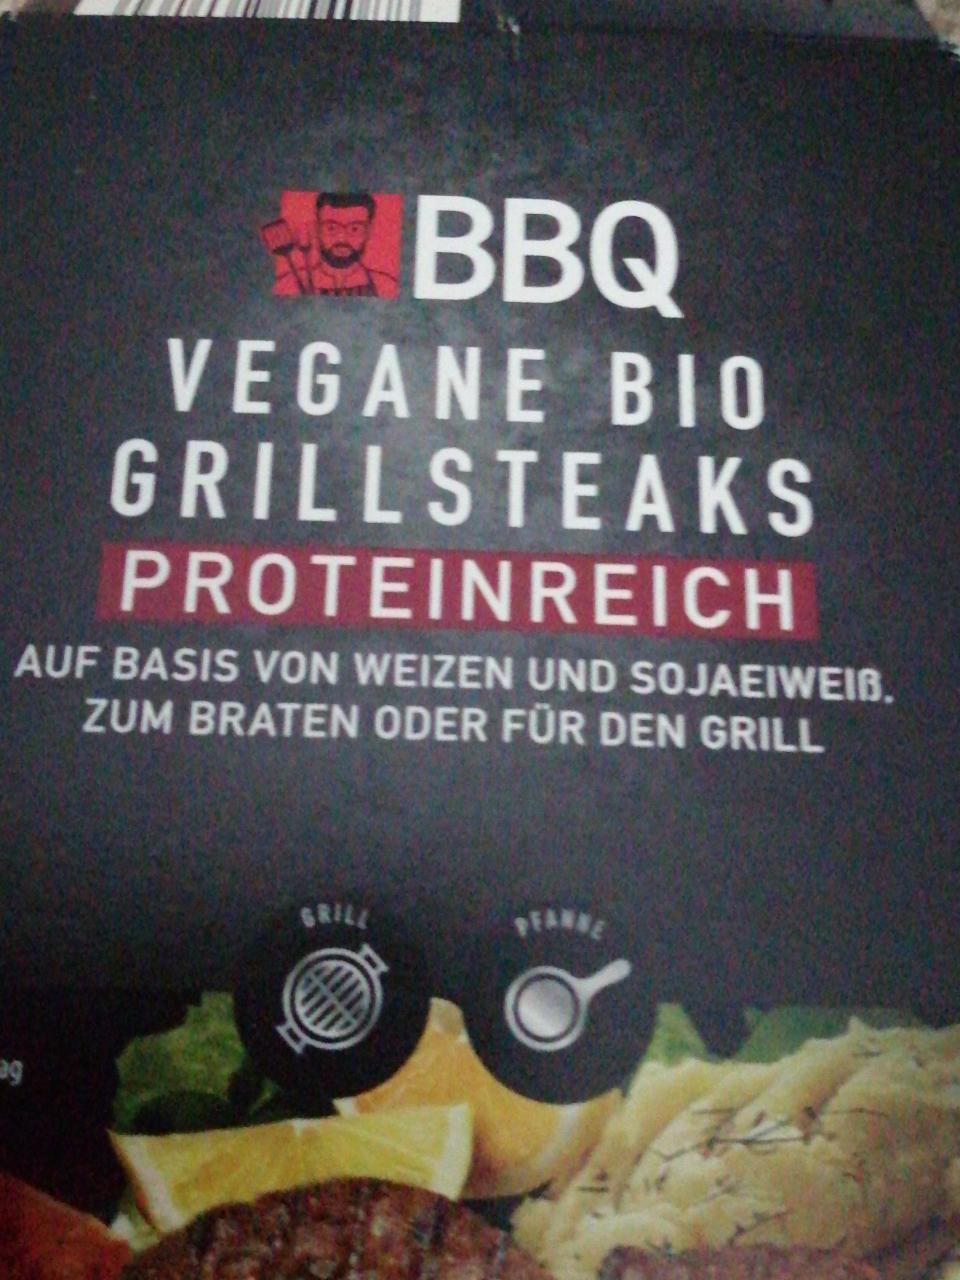 Fotografie - BBQ vegane bio grillsteaks